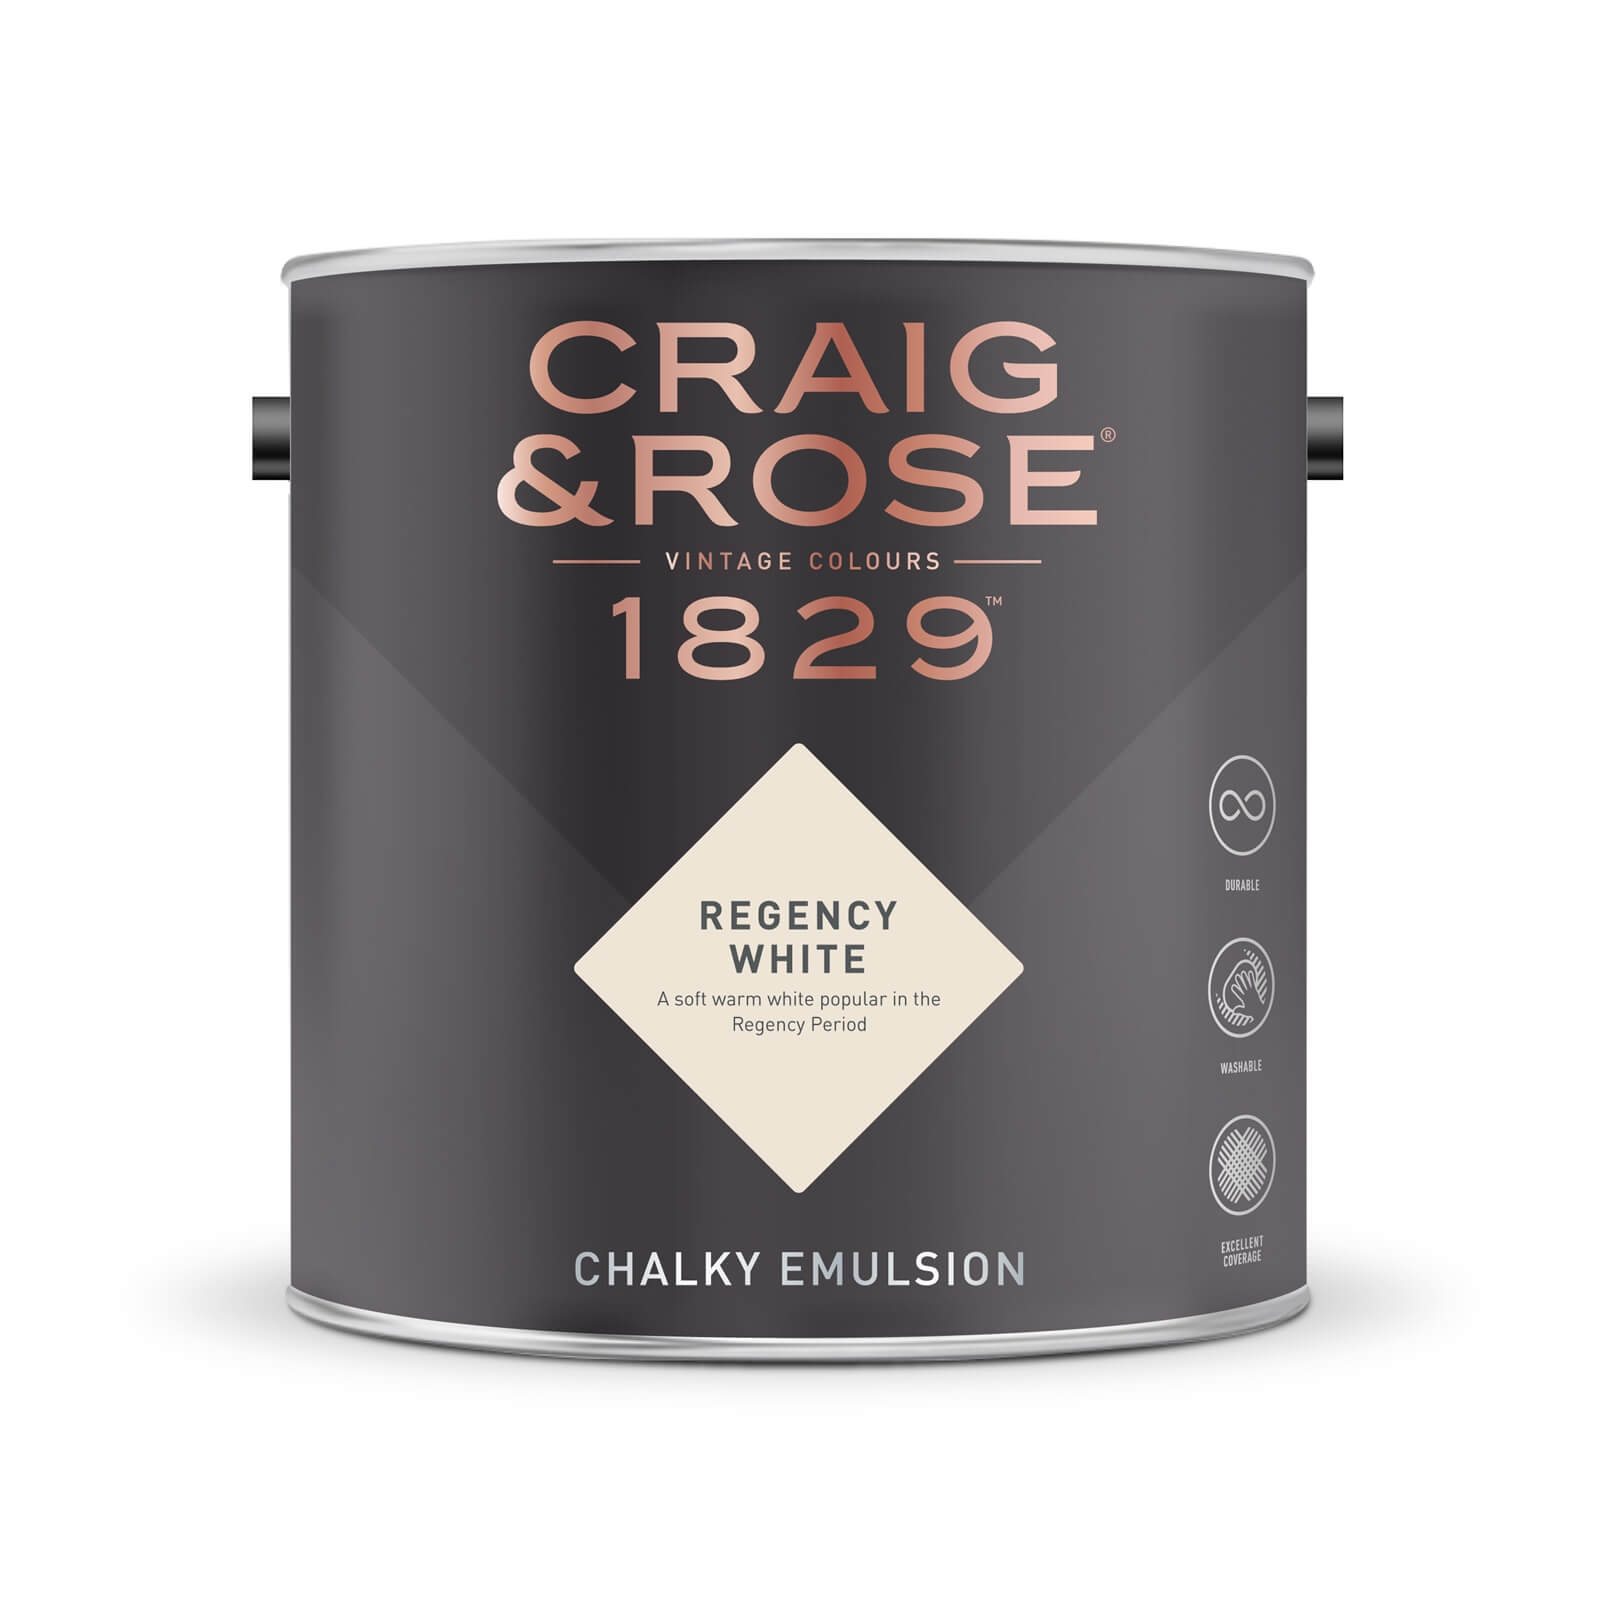 Craig & Rose 1829 Chalky Emulsion Paint Regency White - 2.5L